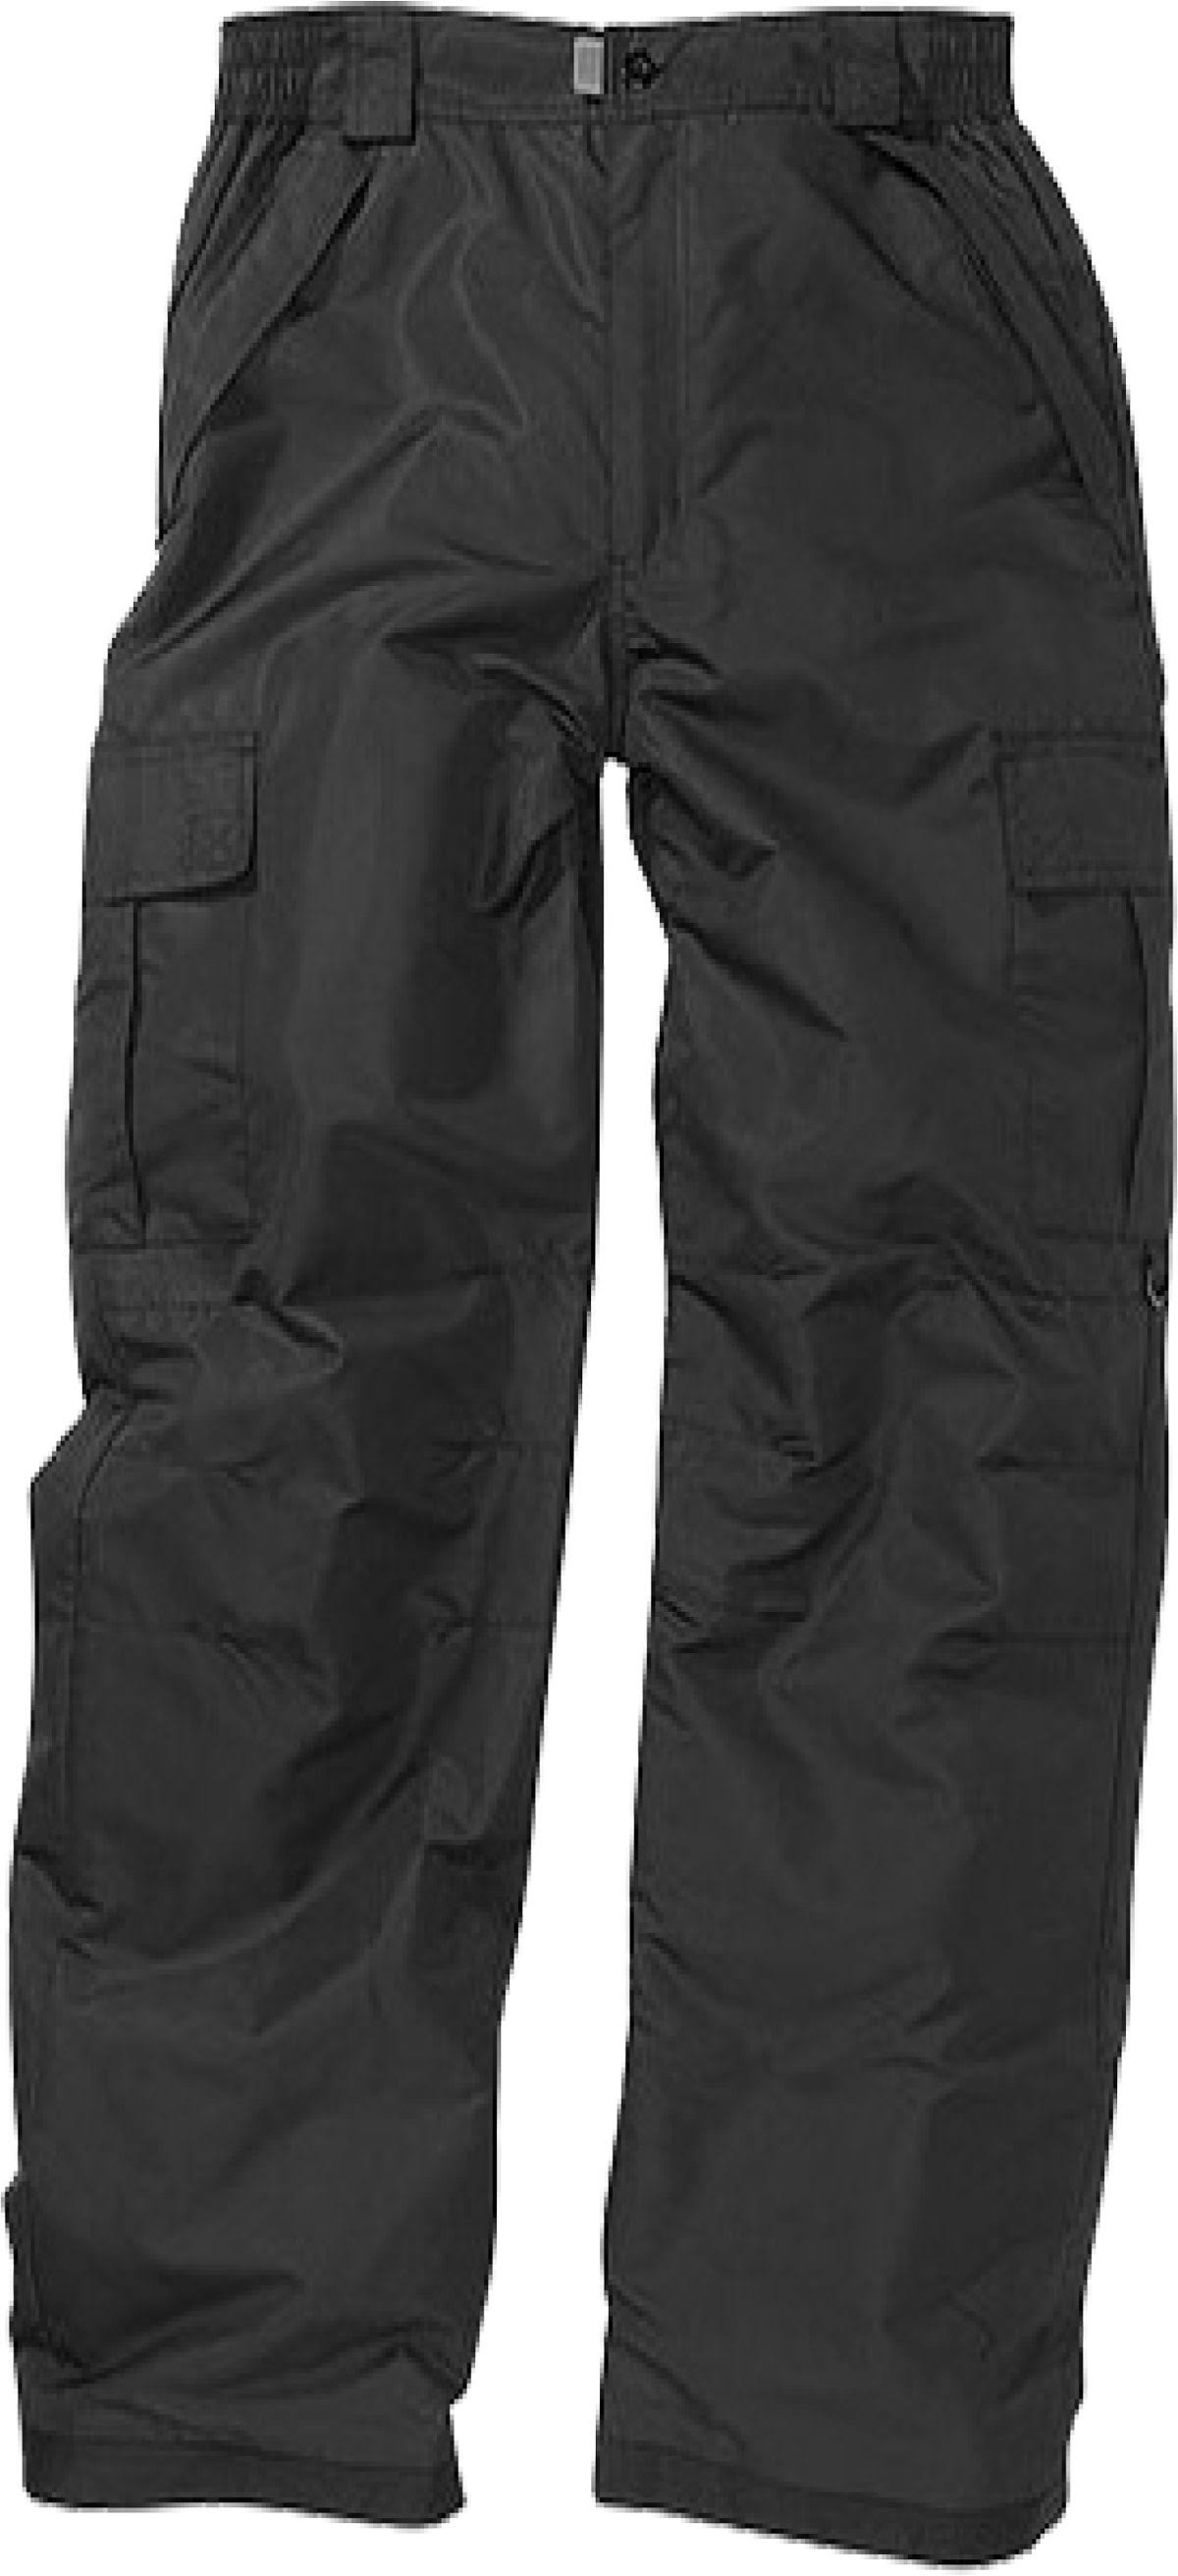 Pulse Men's Black Cargo Snowboard Pants